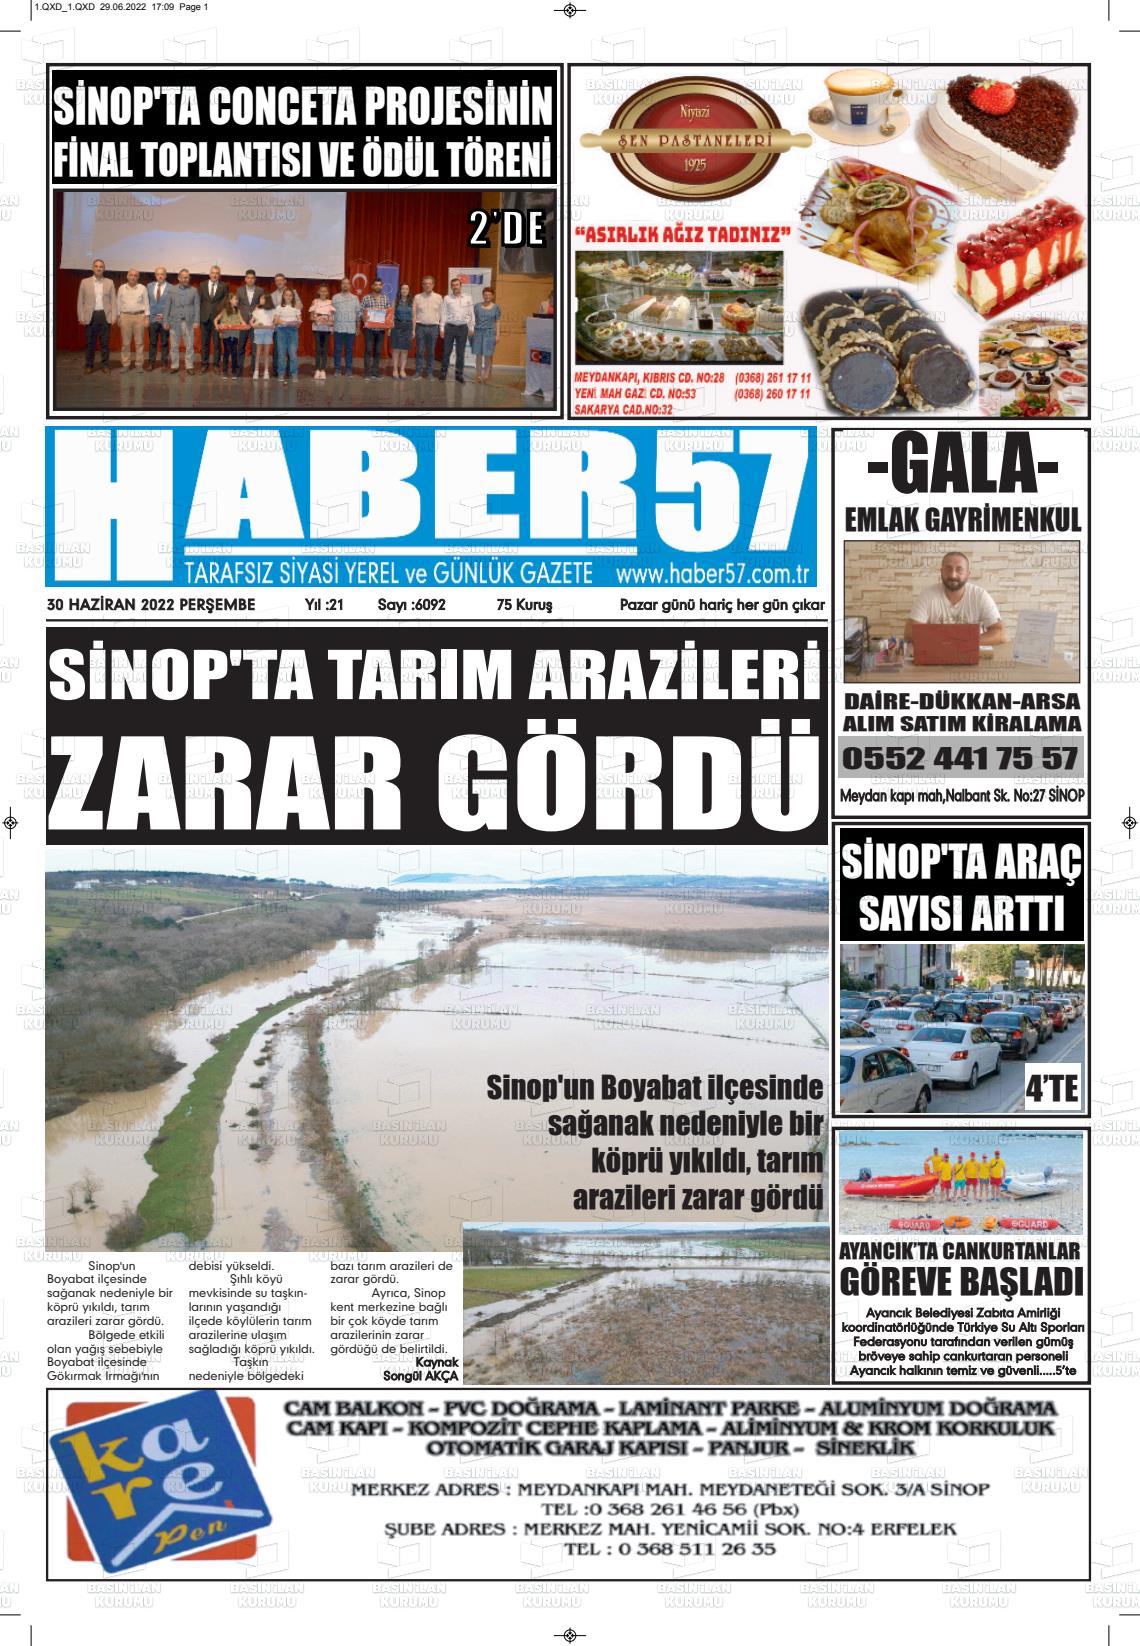 01 Temmuz 2022 Haber 57 Gazete Manşeti